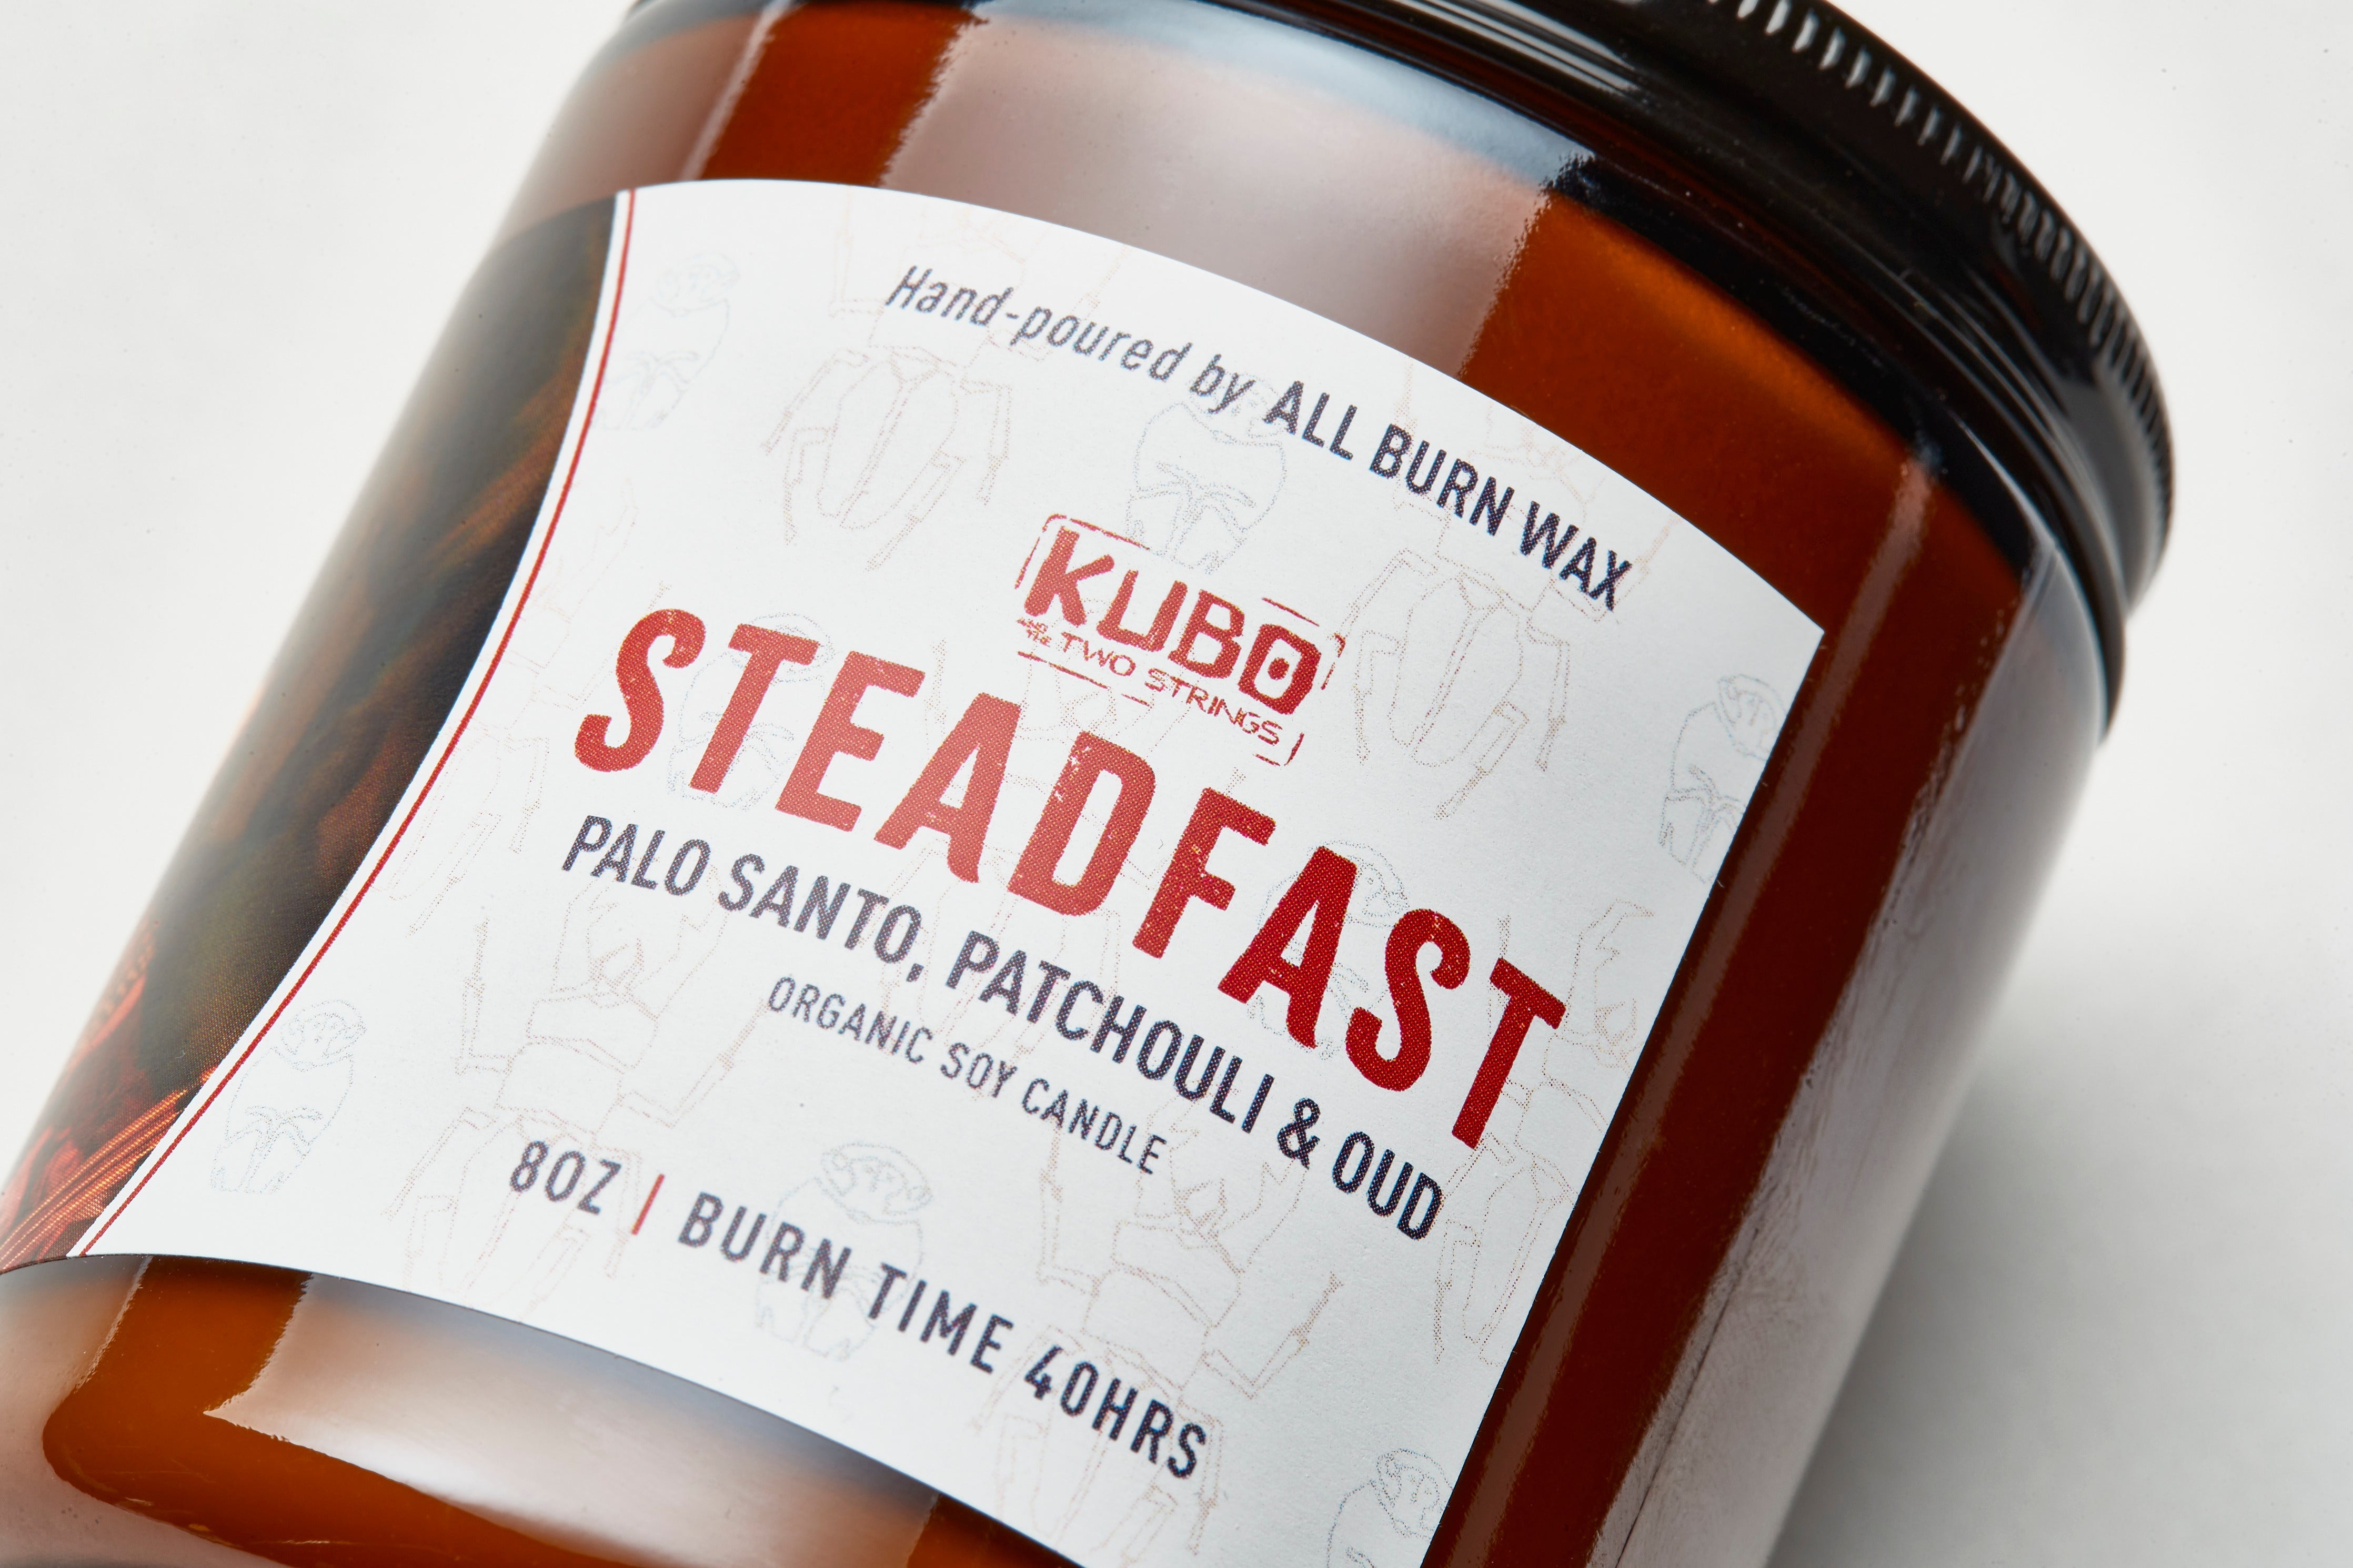 Kubo 'Steadfast' Organic Soy Candle